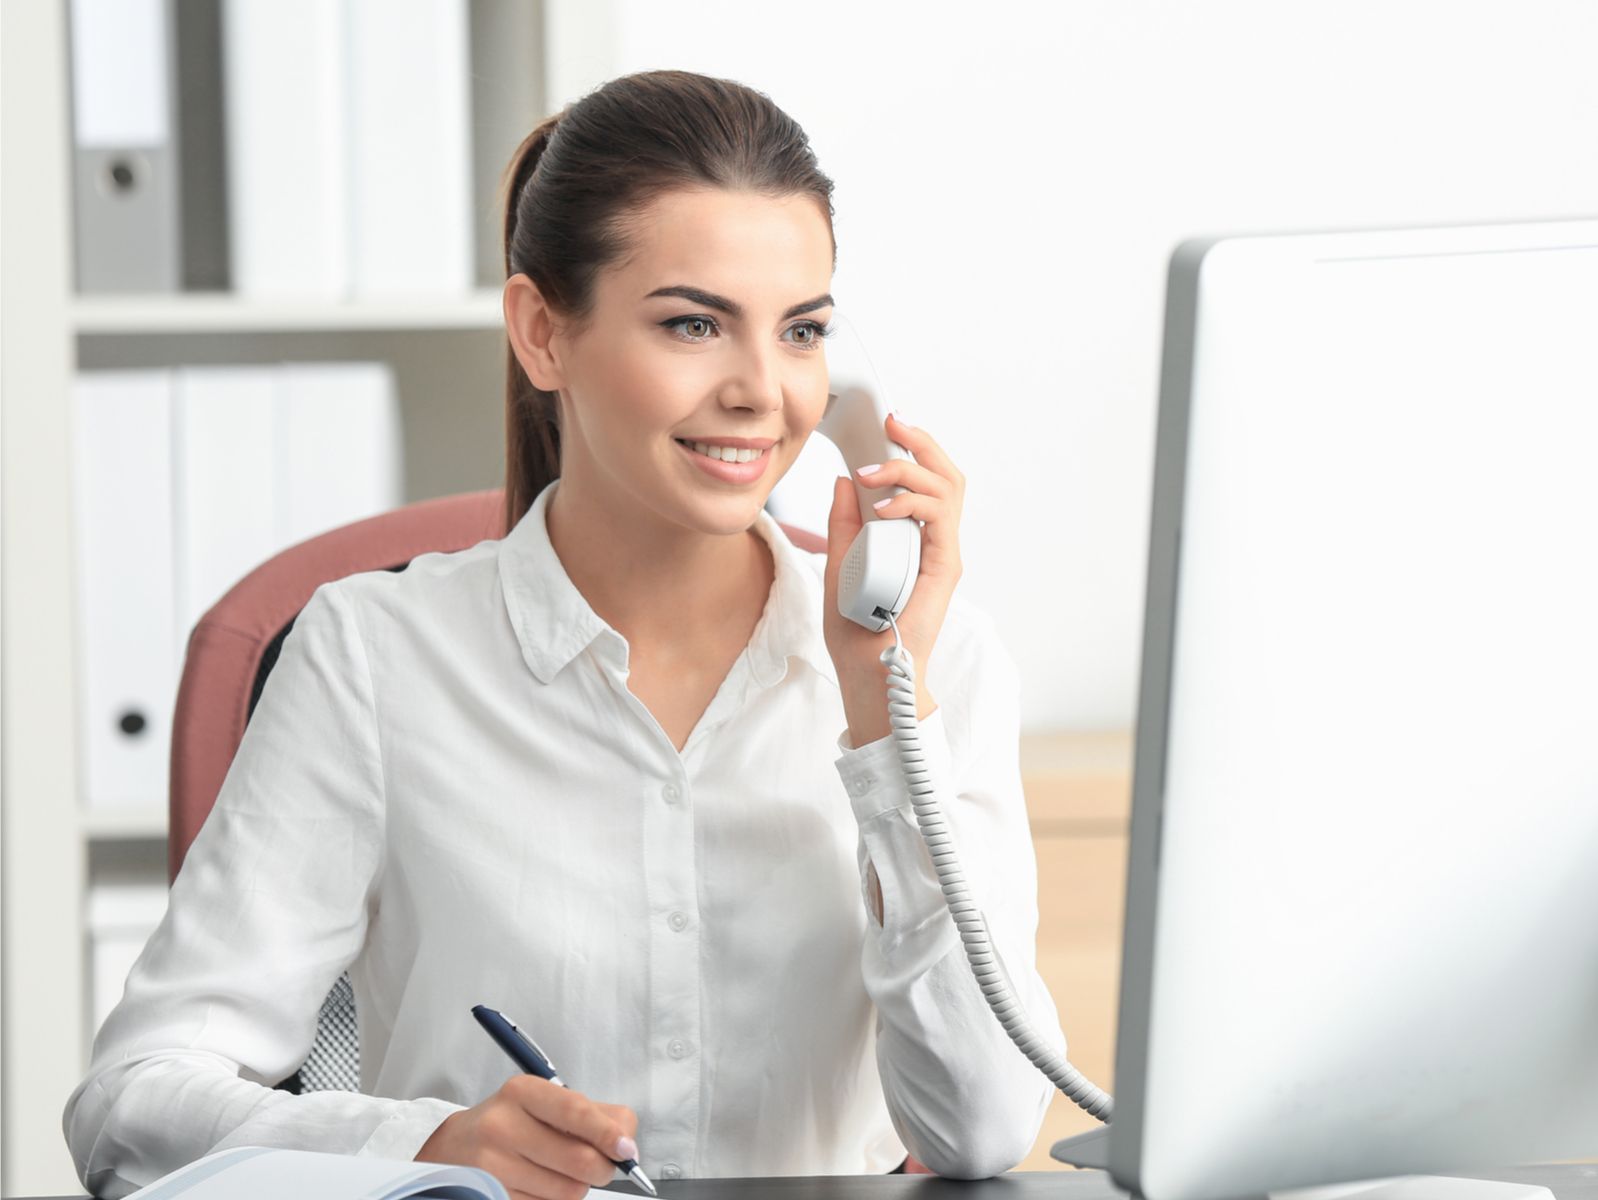 Call answering, secretarial & accounting services